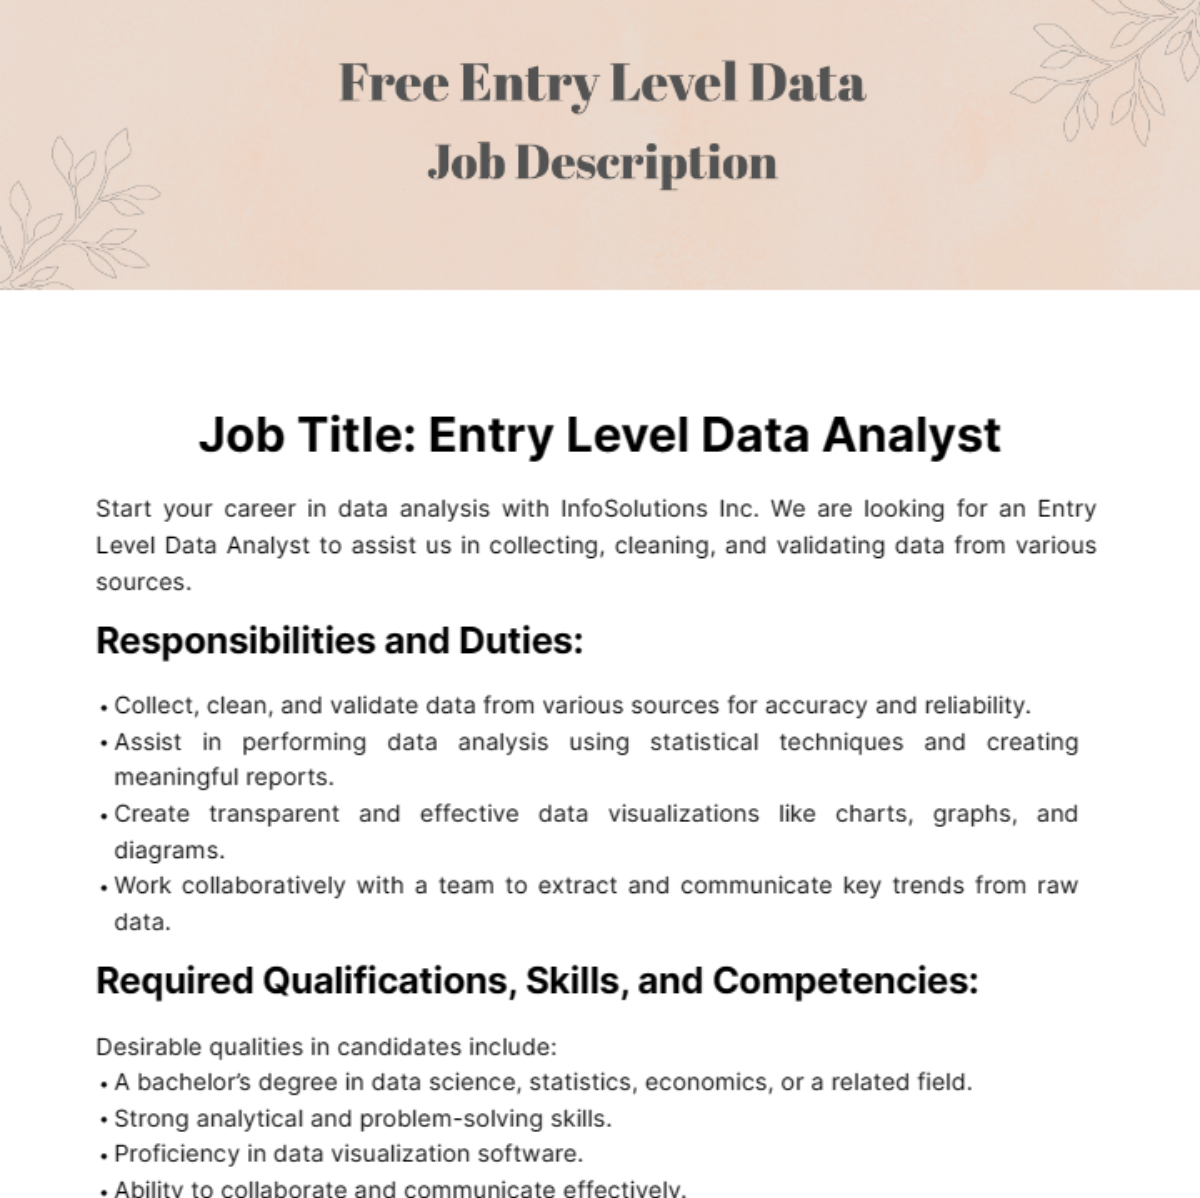 Free Entry Level Data Job Description Template